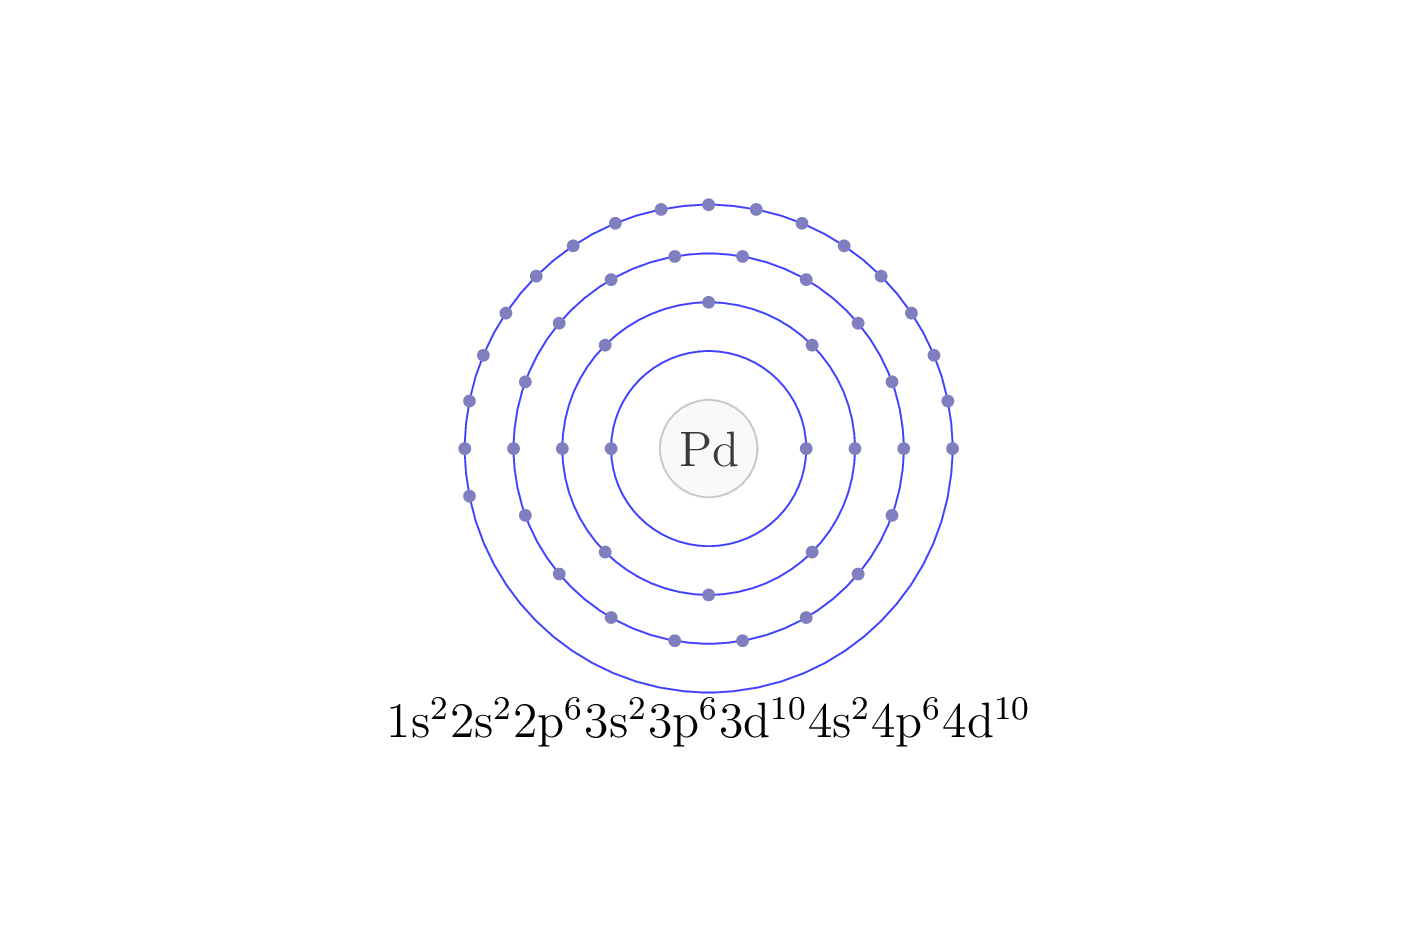 electron configuration of element Pd